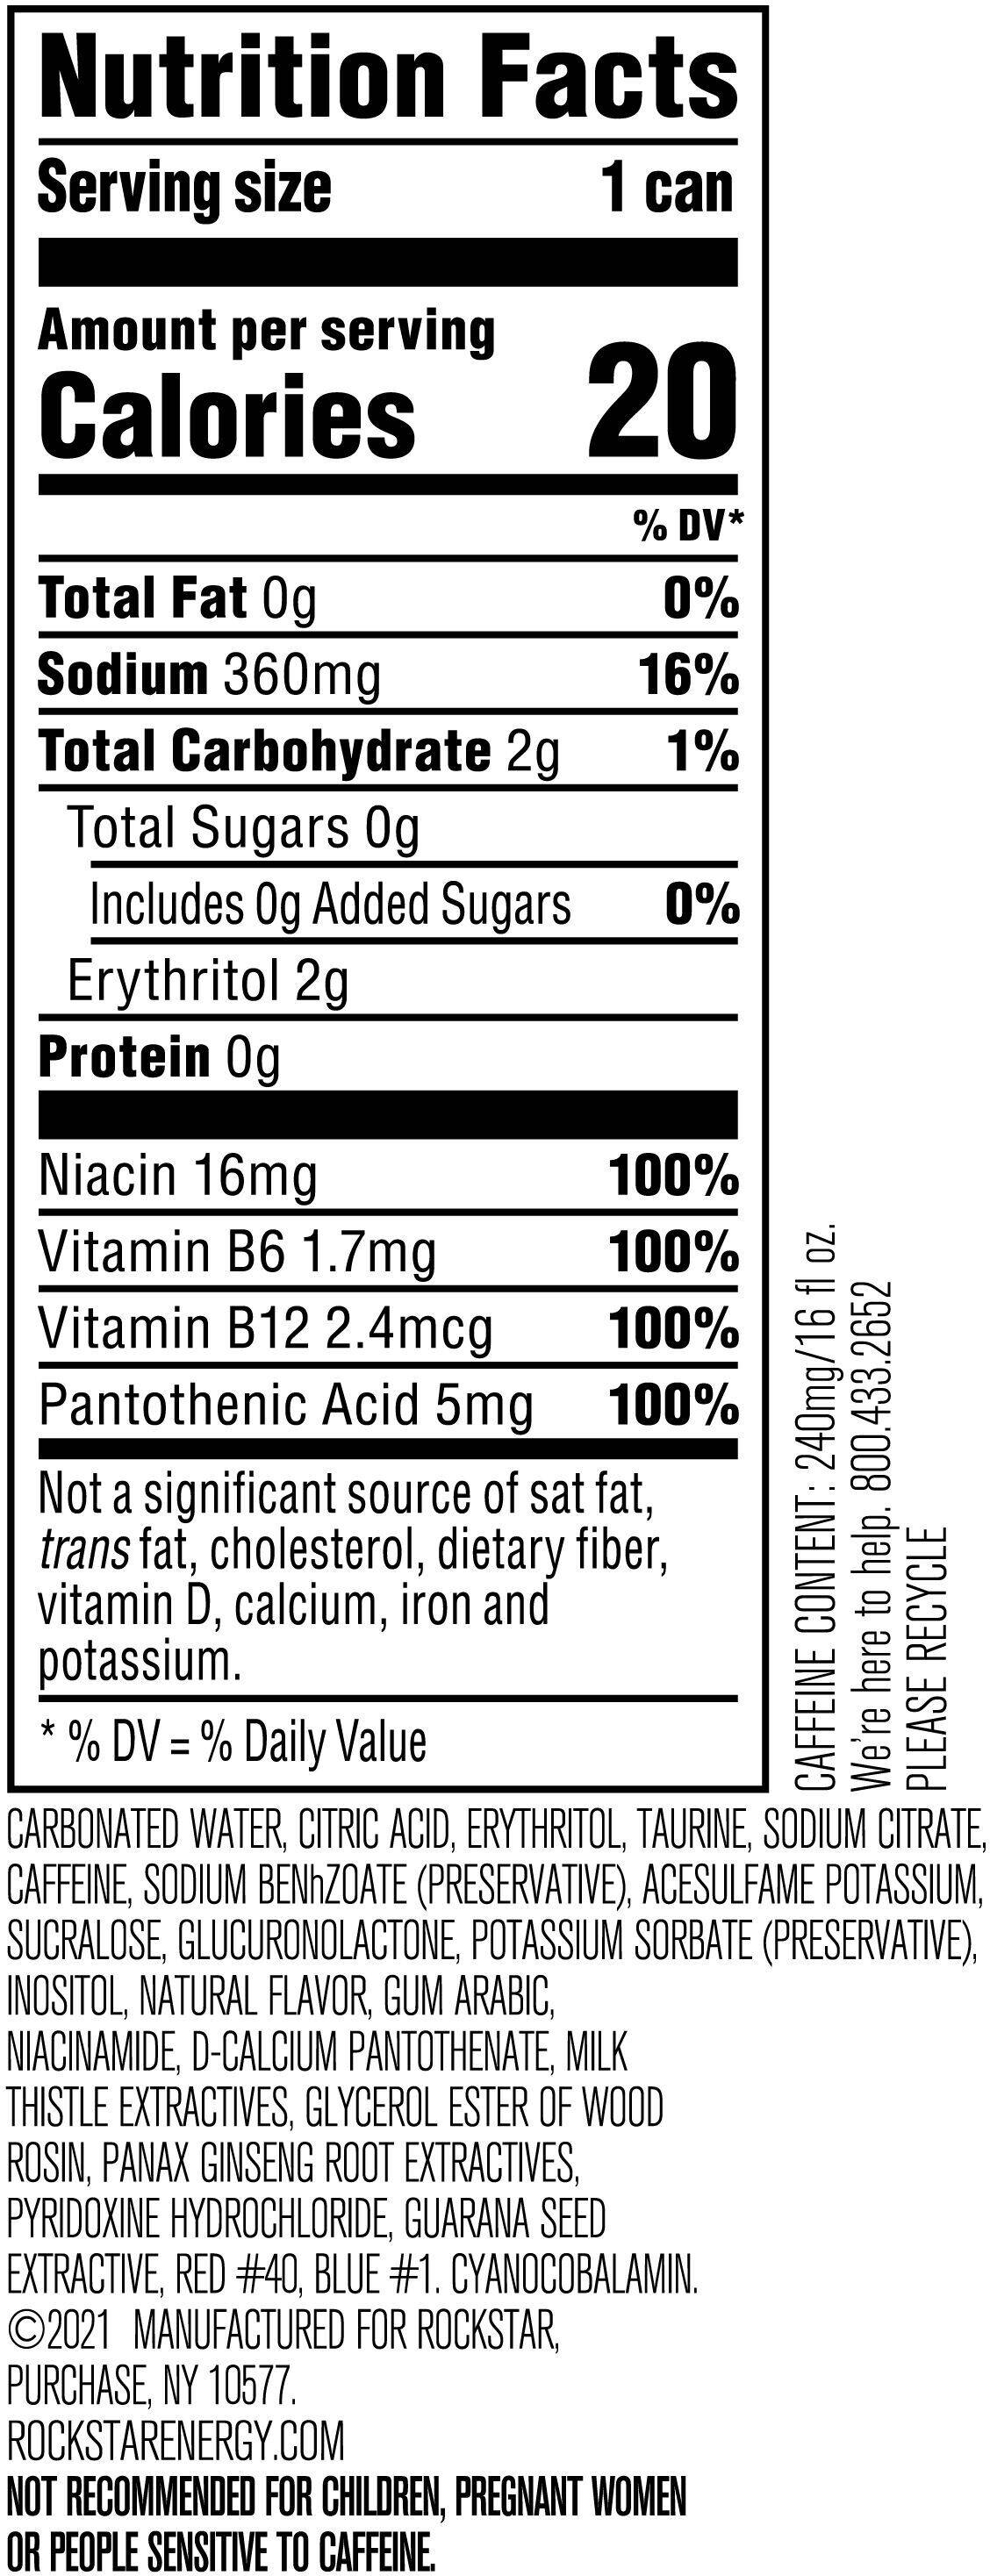 Image describing nutrition information for product Rockstar Pure Zero Punch